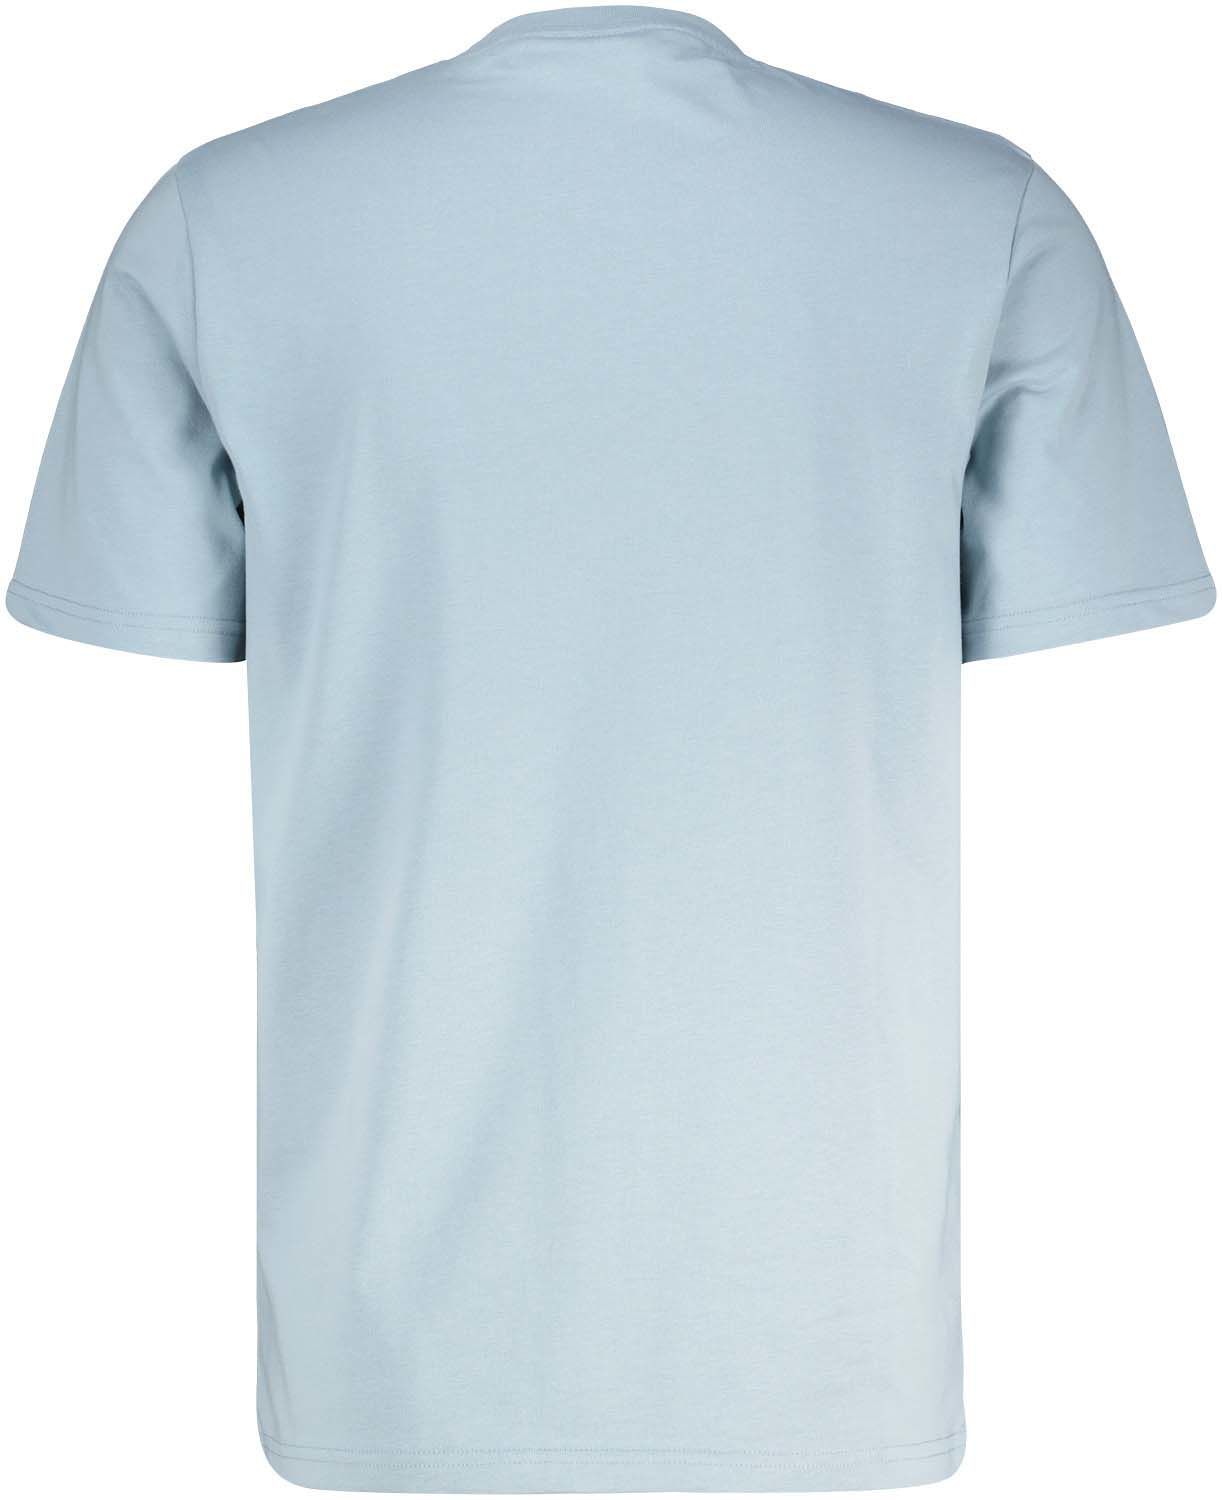 Lyle & Scott T-Shirt Blauw